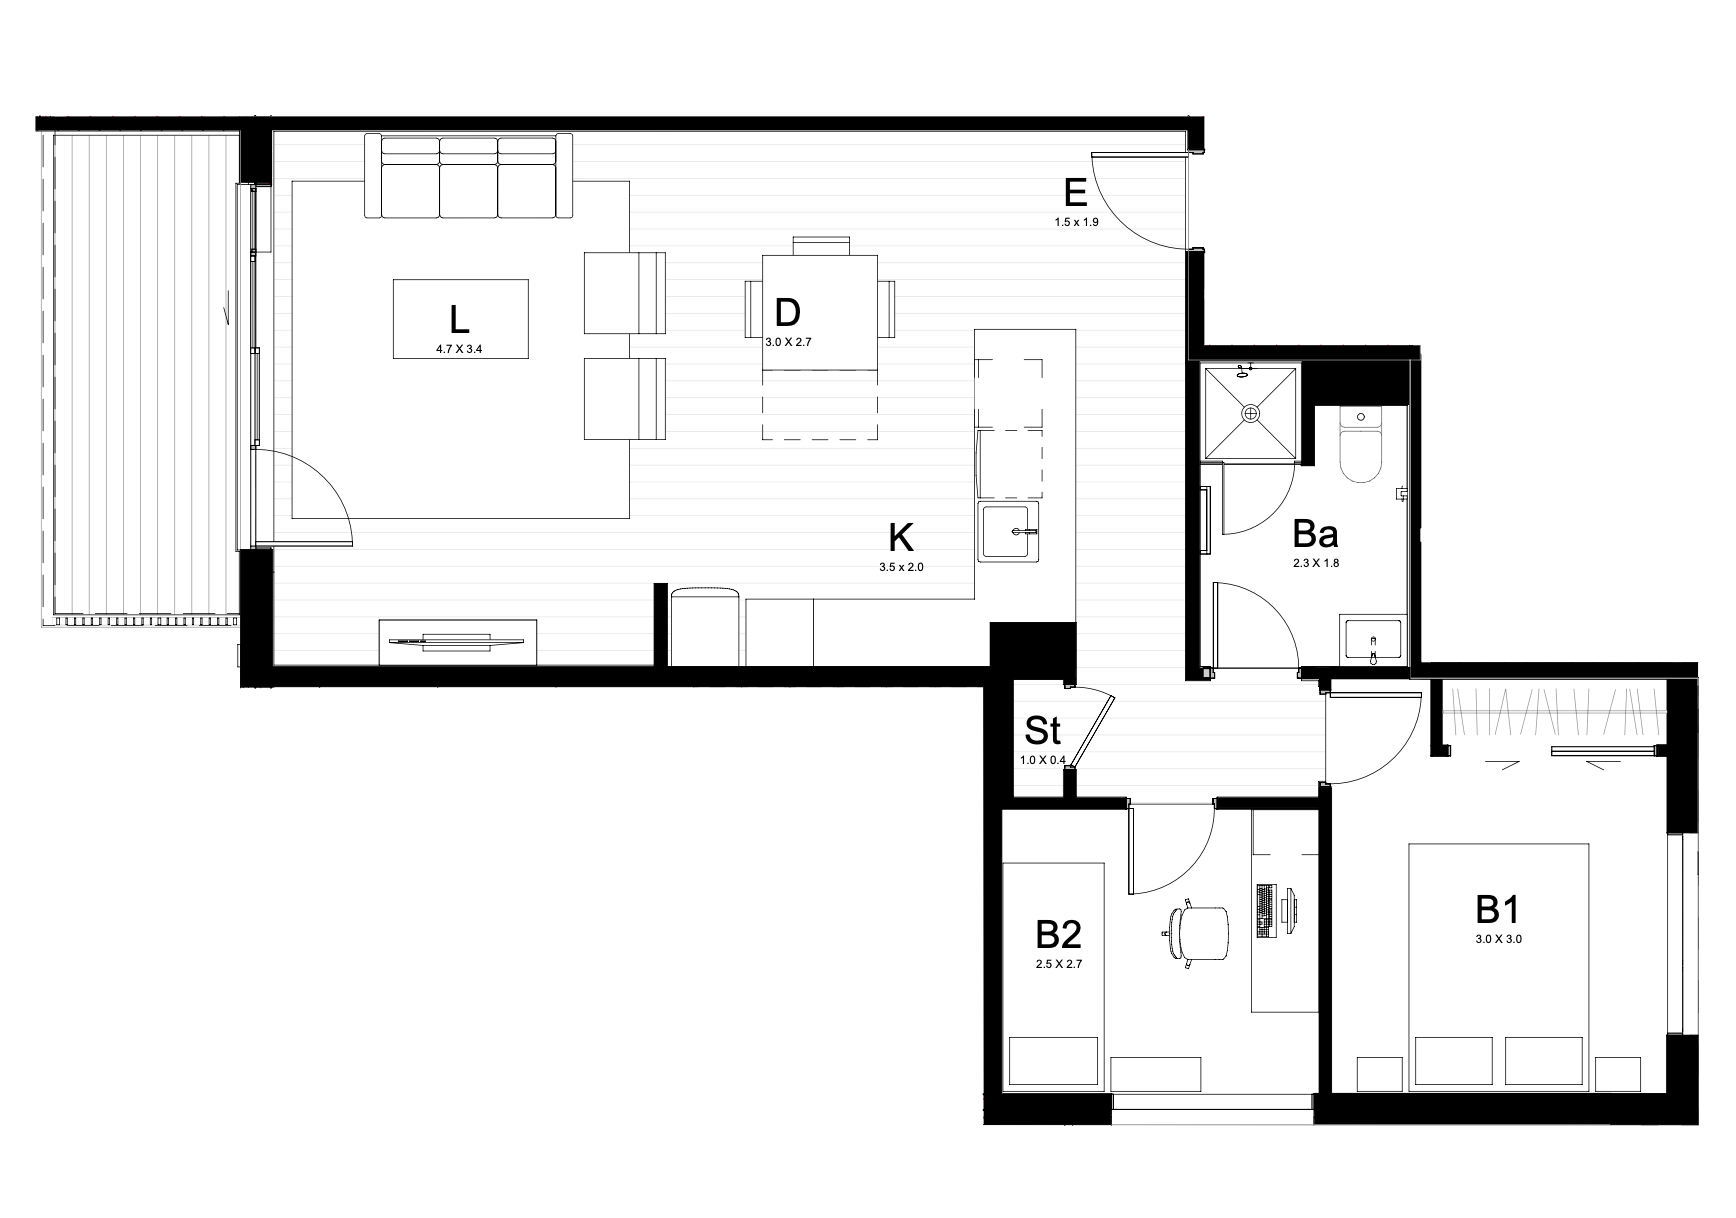 1-bed-1-study-floorplan.png